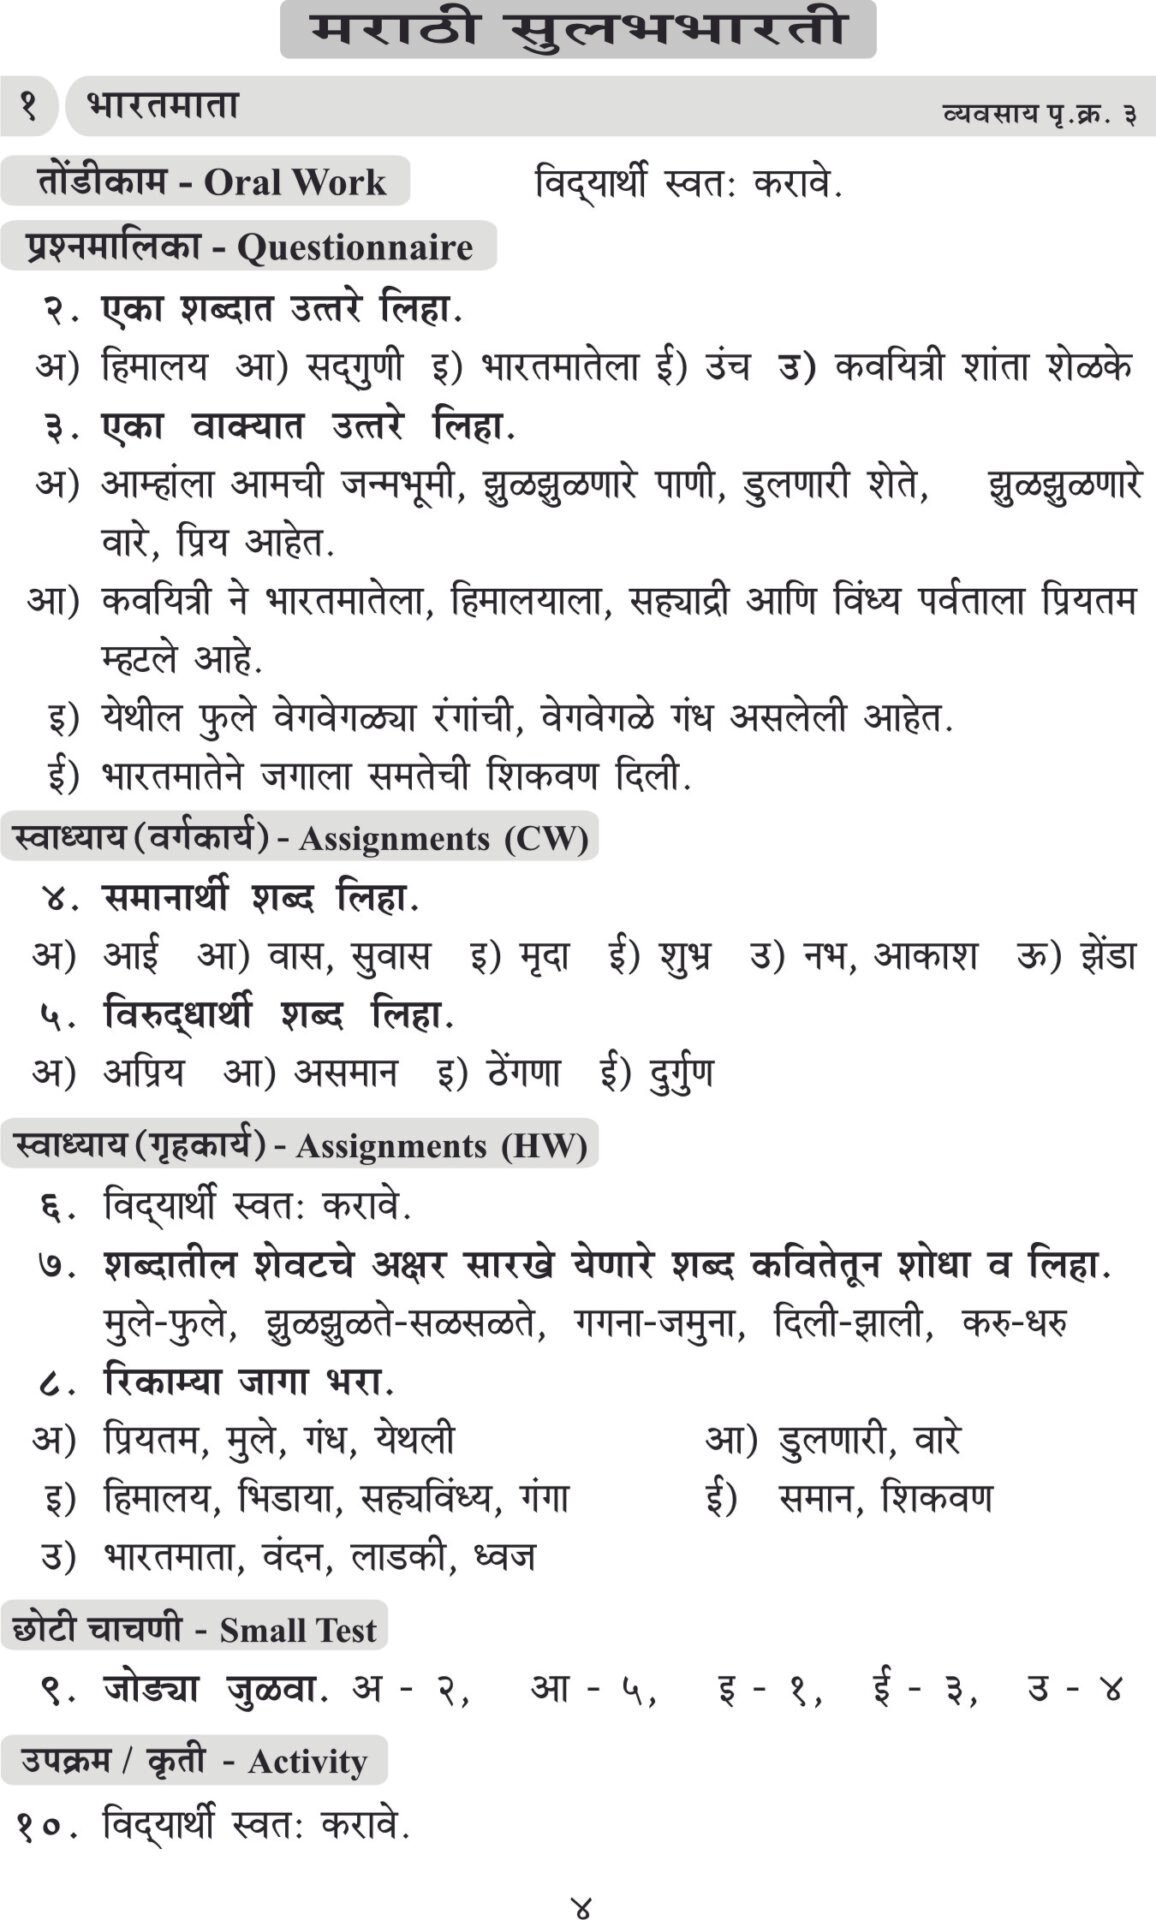 nigam-cce-scholar-workbooks-ready-answers-marathi-sulabhbharati